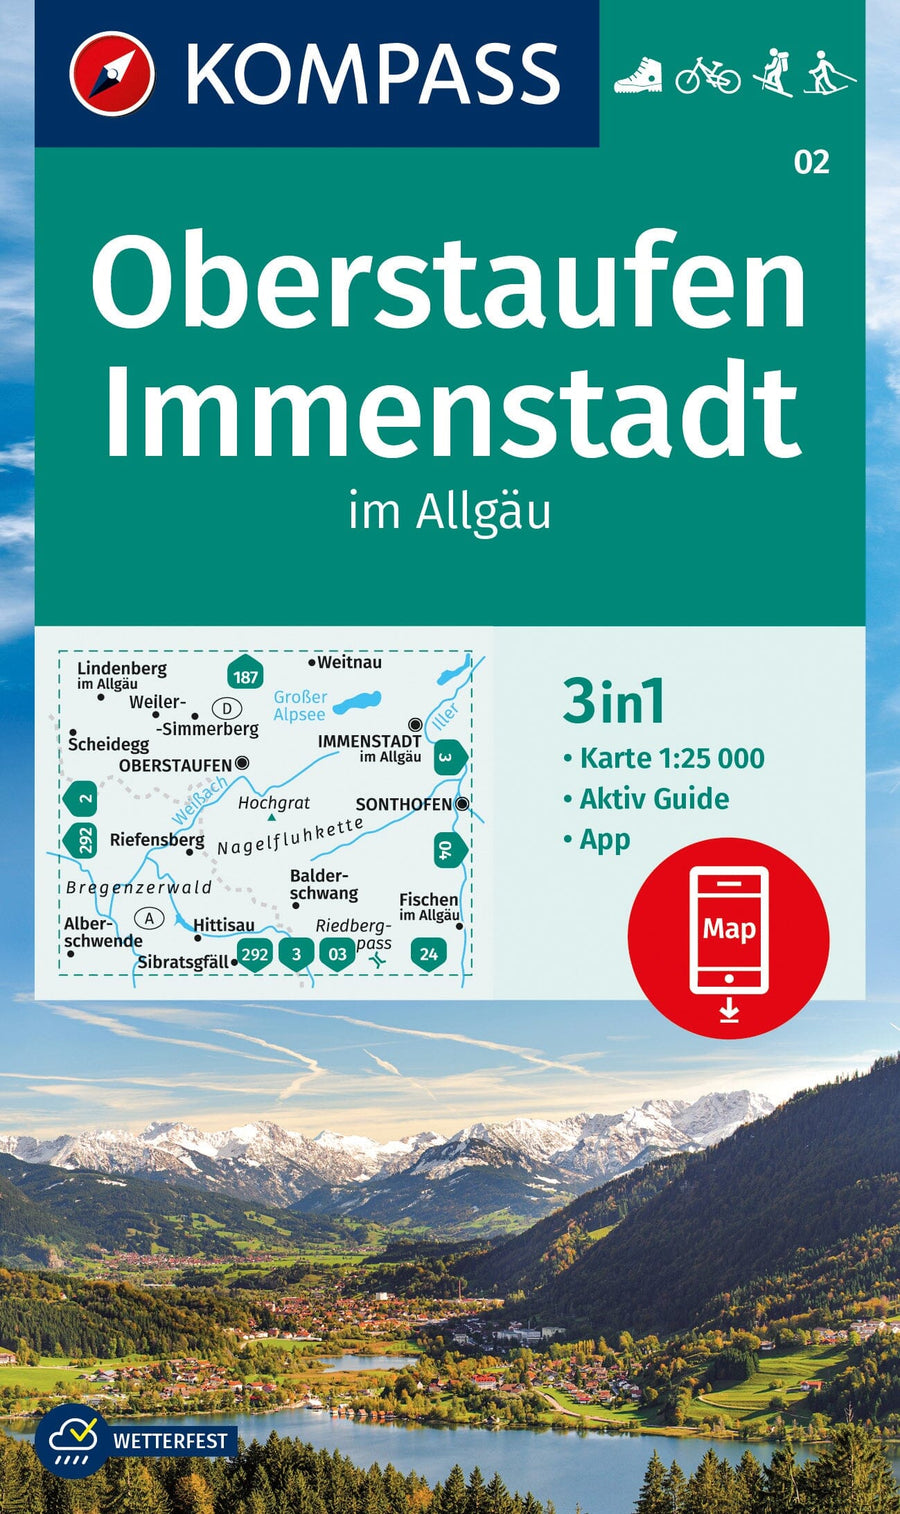 Kompass 1:25,000 - Hiking Maps of Southern Germany, Austria, Alpine Ar –  MapsCompany - Travel and hiking maps